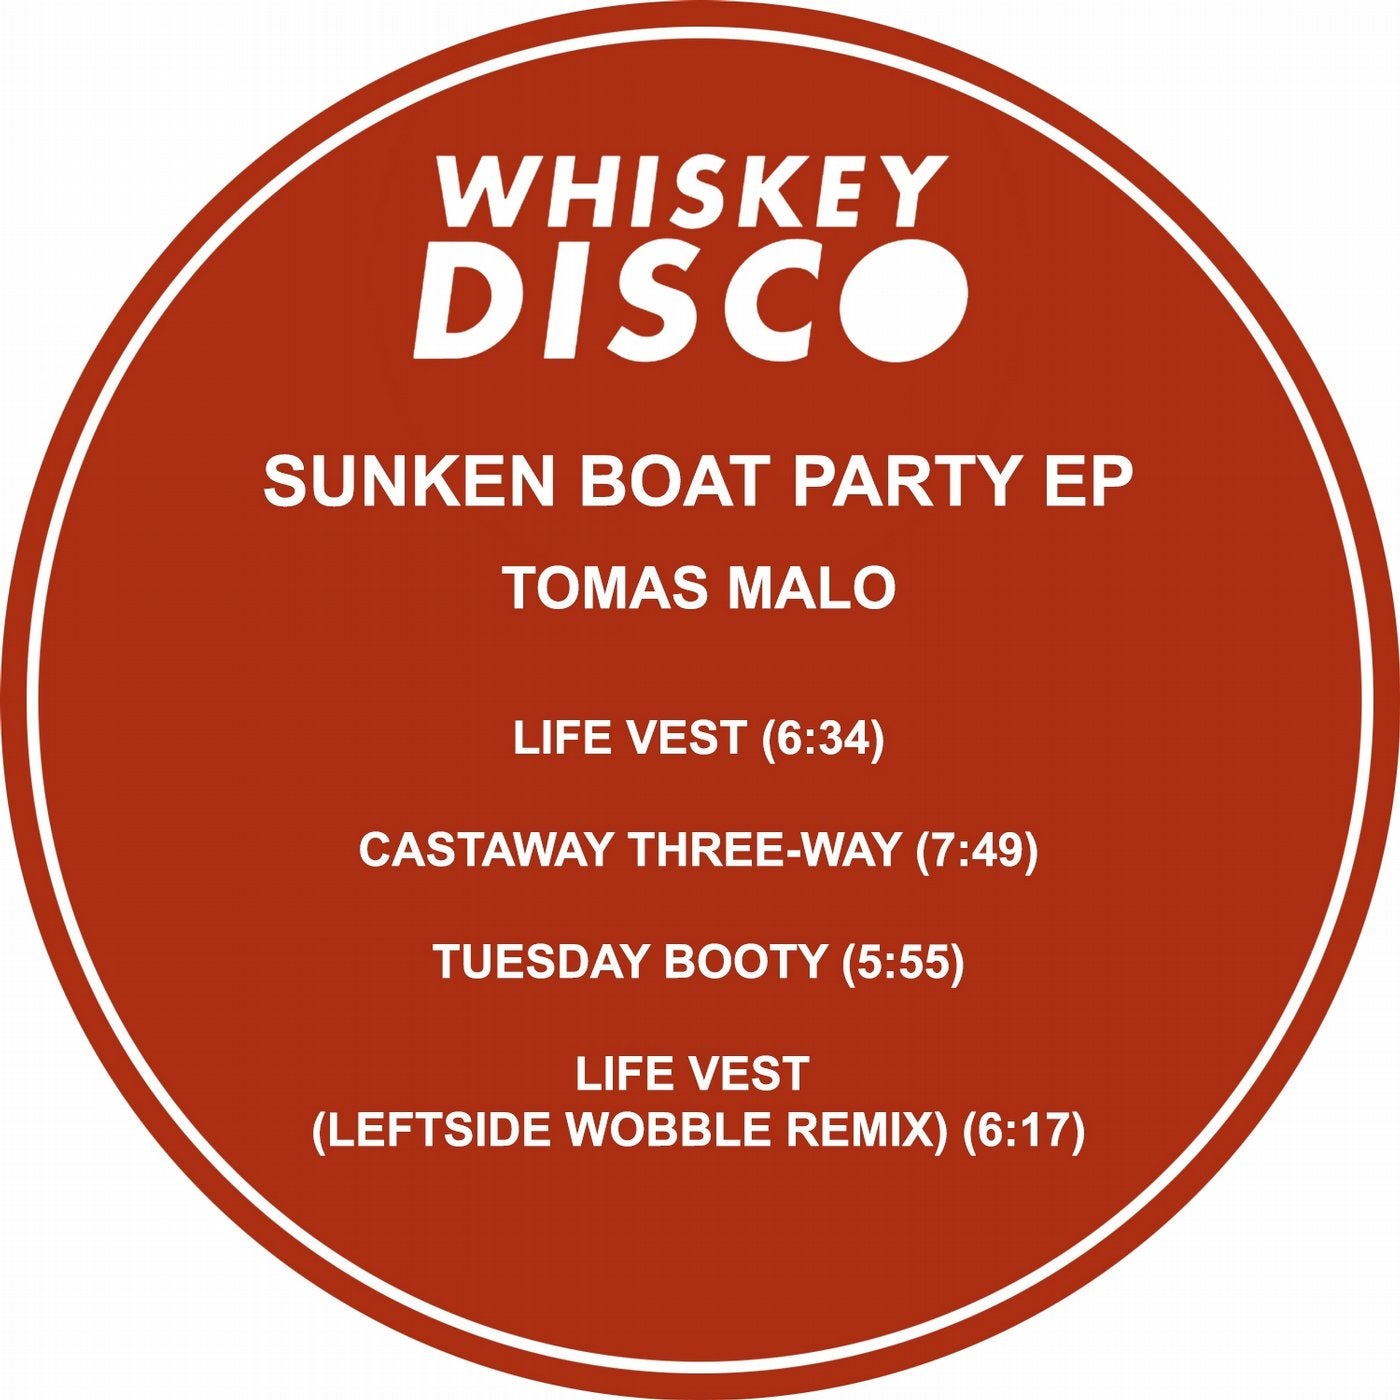 Sunken Boat Party EP